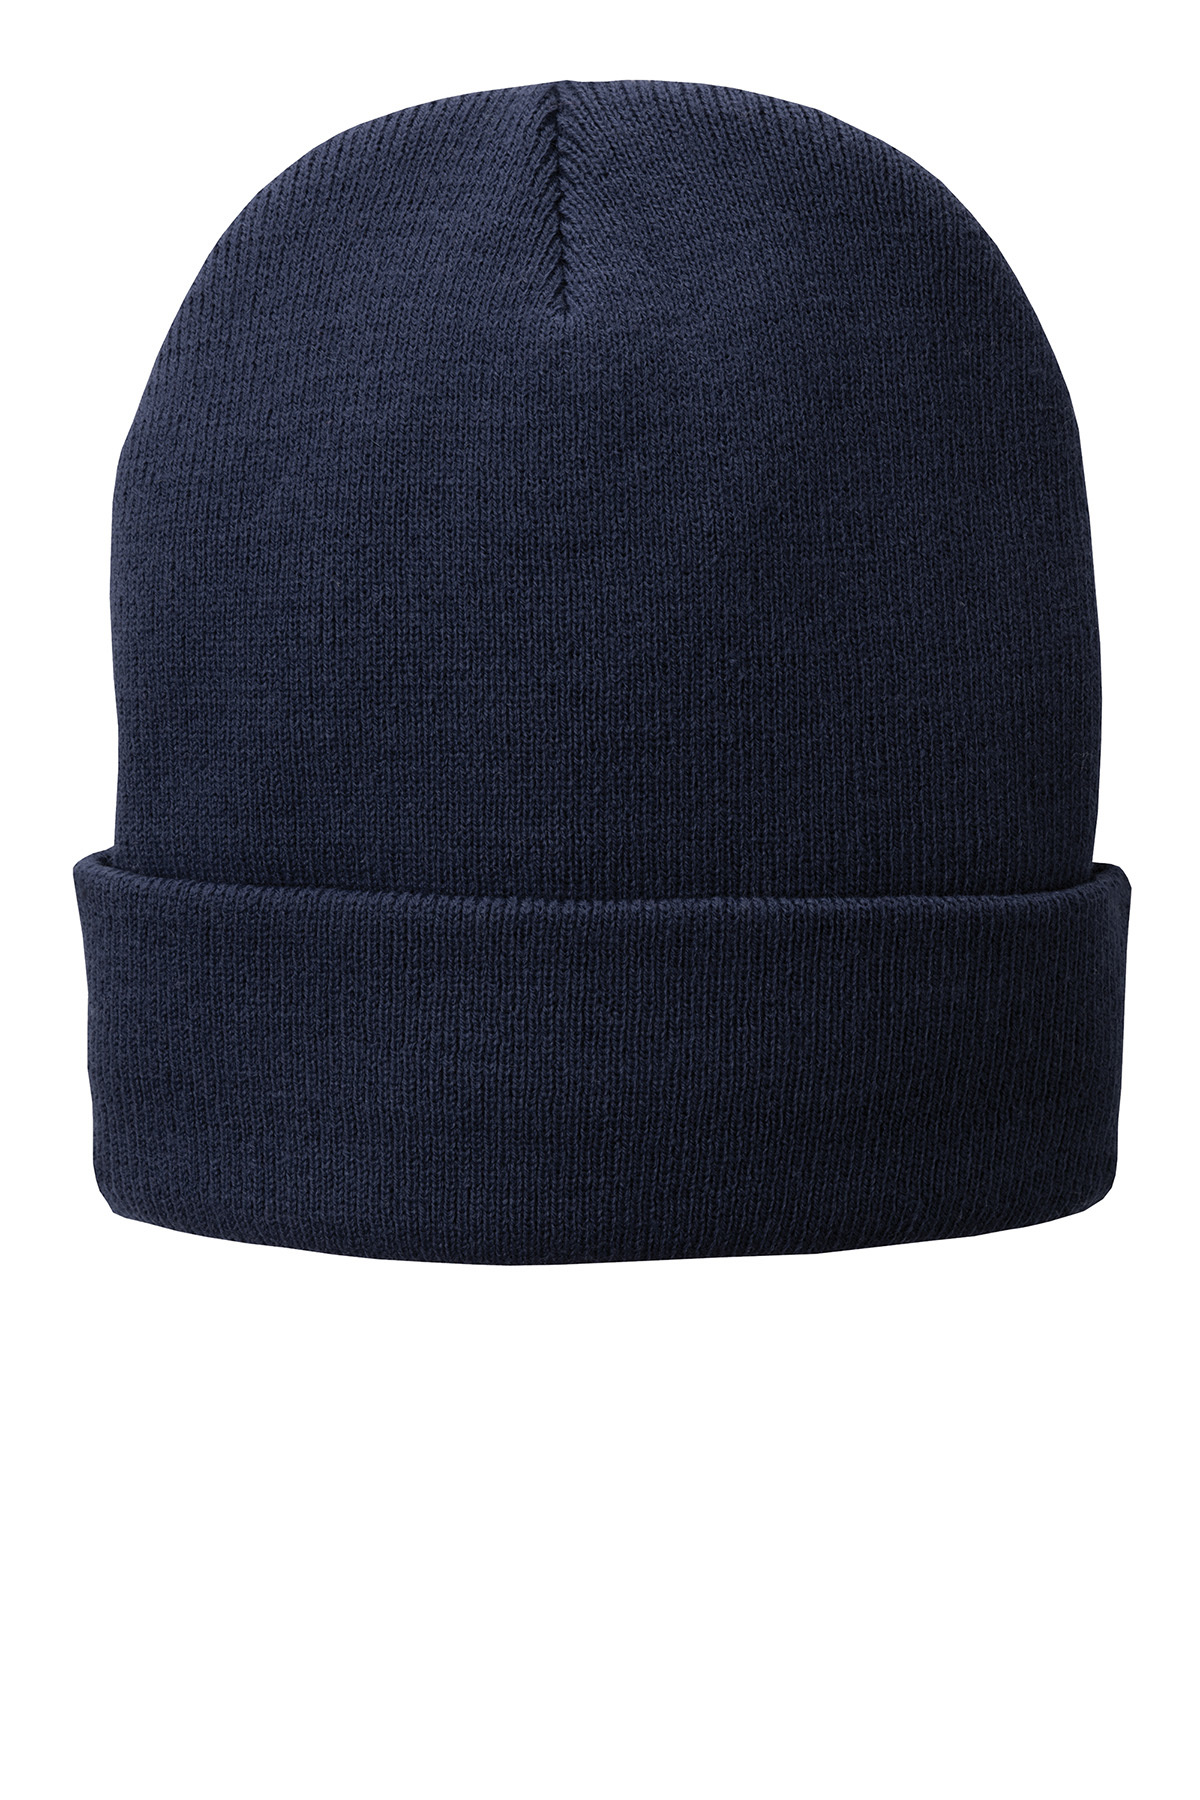 Port & Company Fleece-Lined Knit Cap, Product